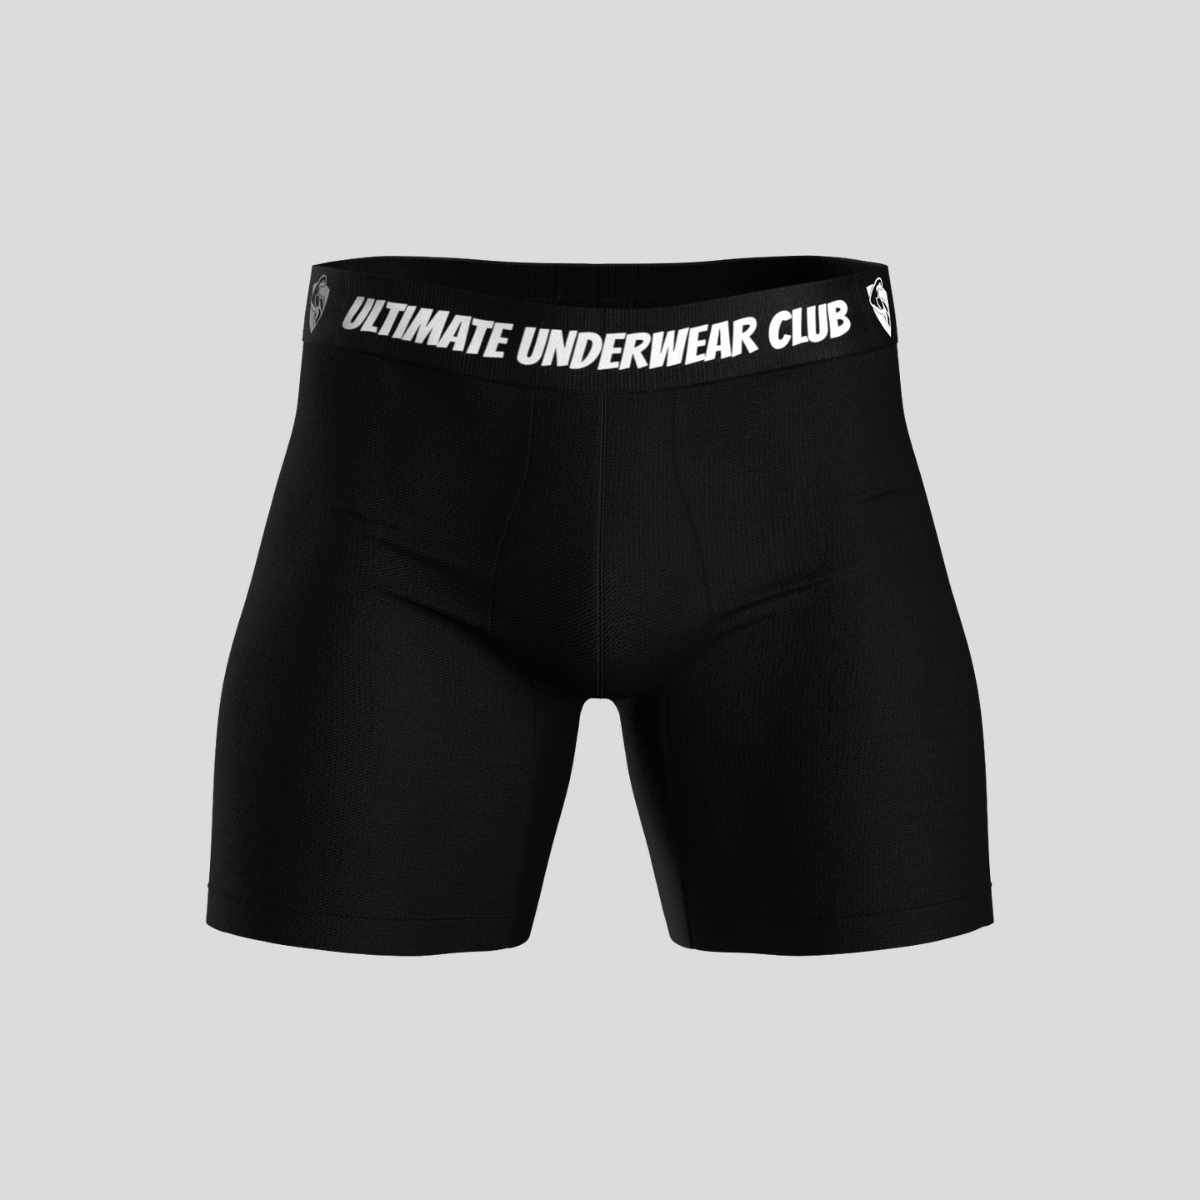 Black Bamboo Boxer Brief Underwear for Men 